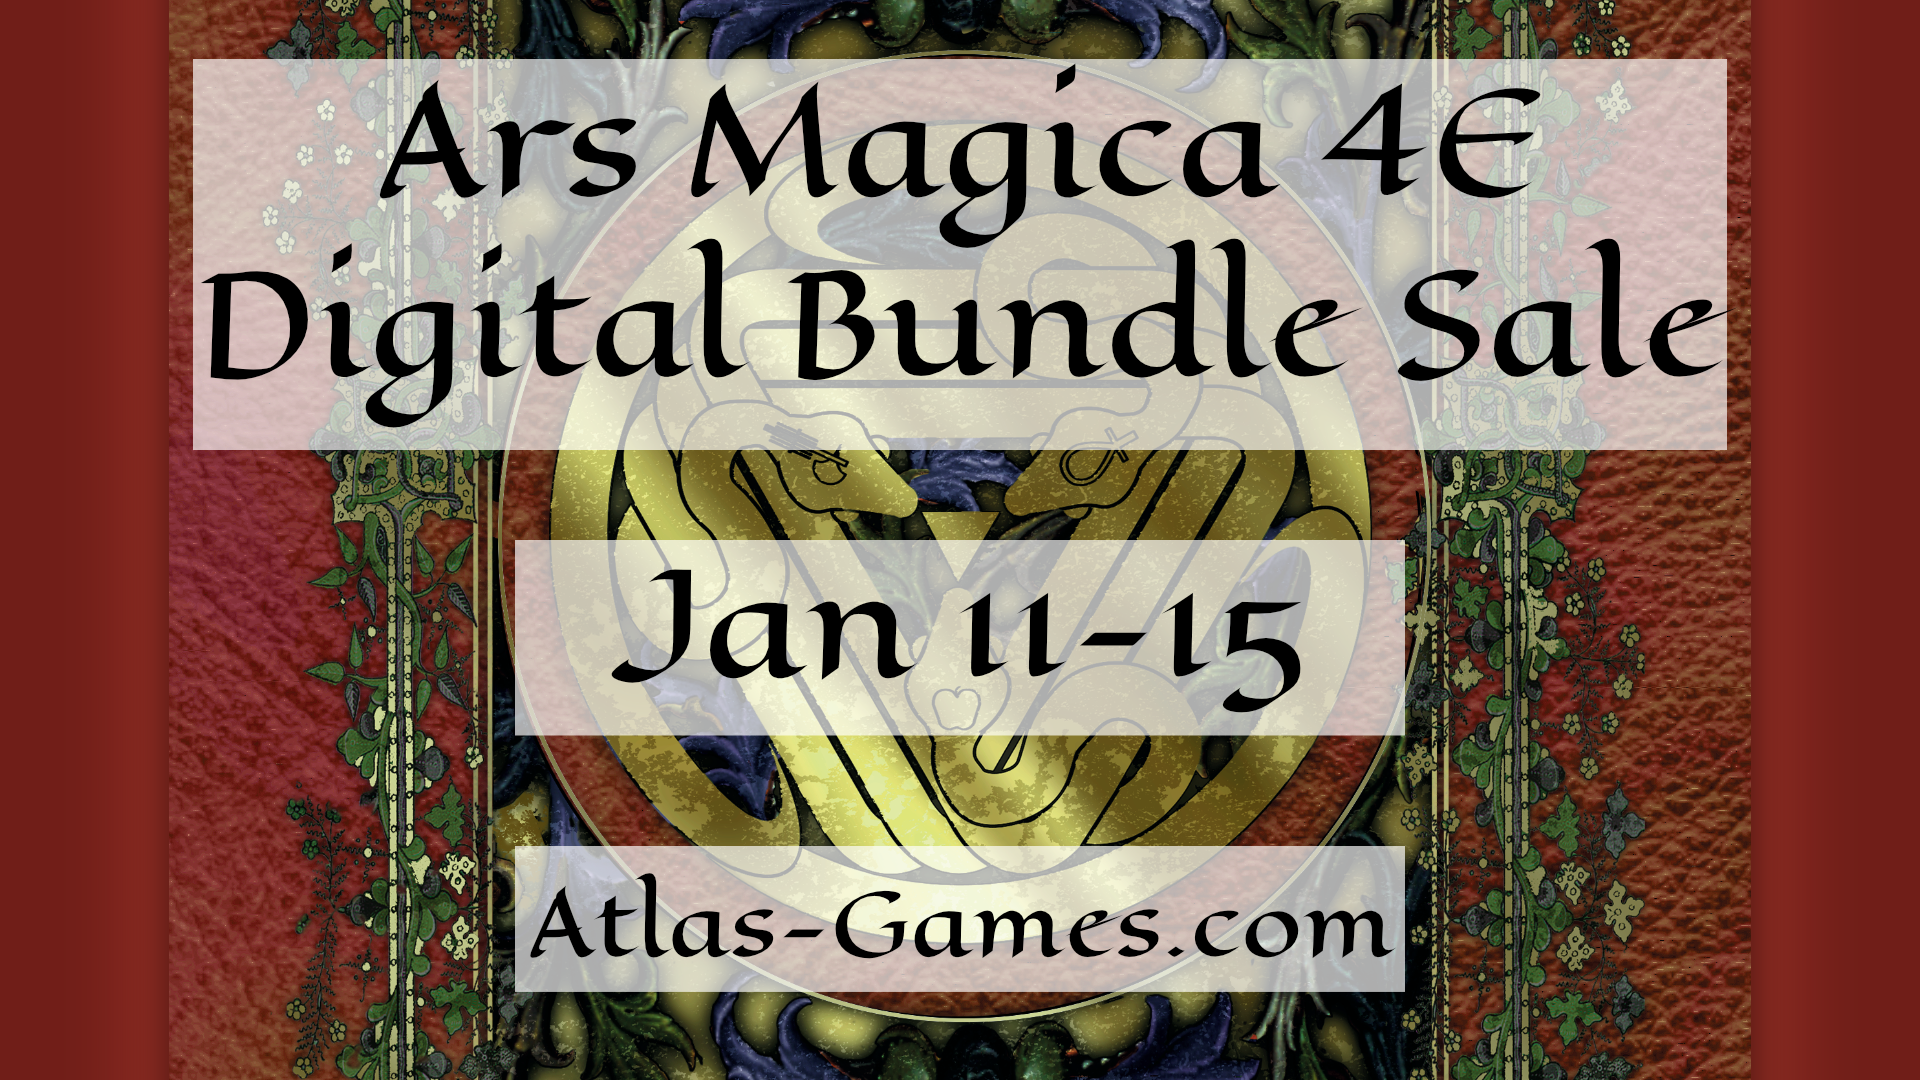 OVER 75% OFF Ars Magica 4E Digital Bundle!